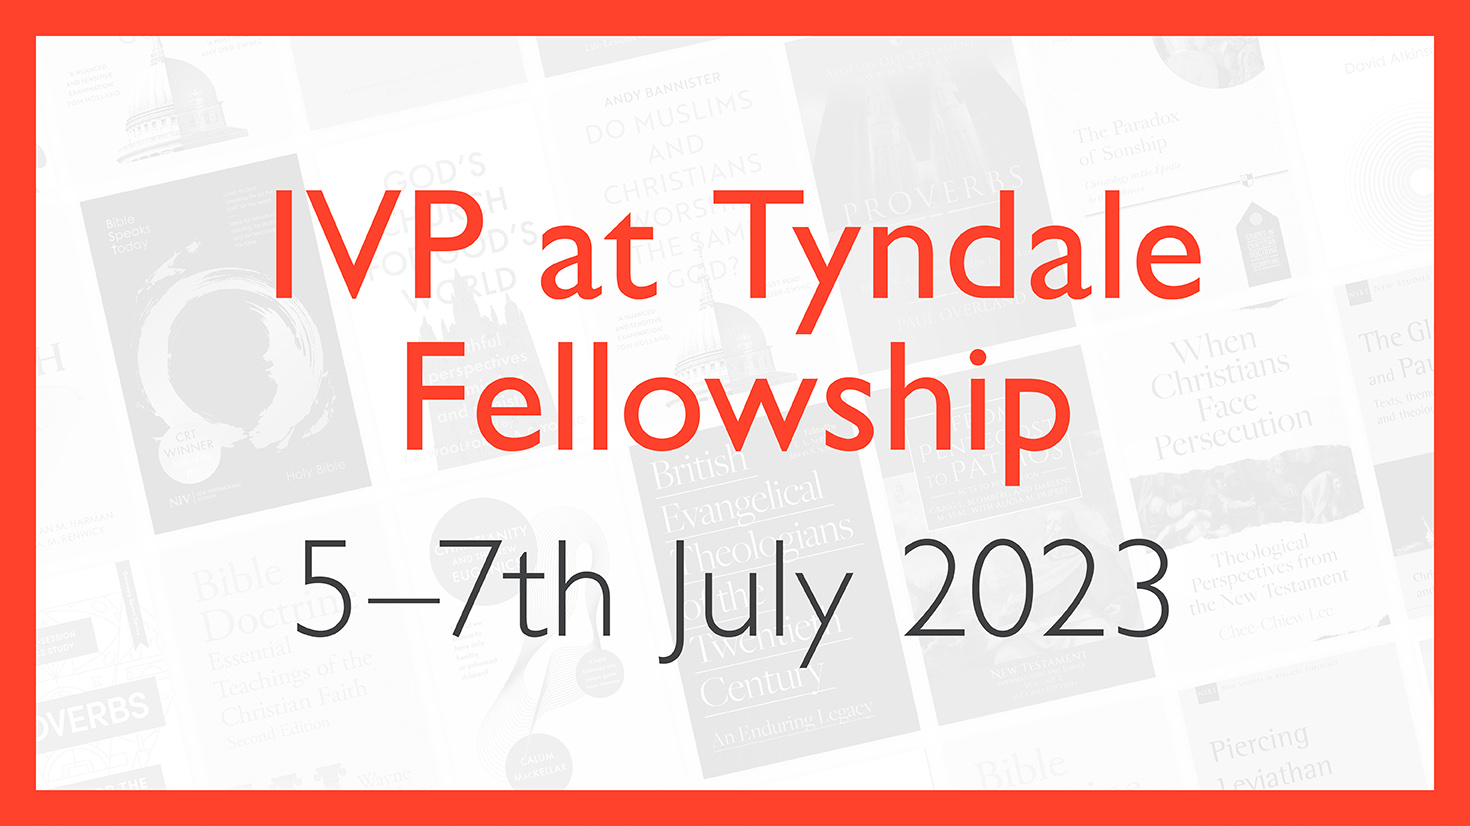 IVP at Tyndale Fellowship